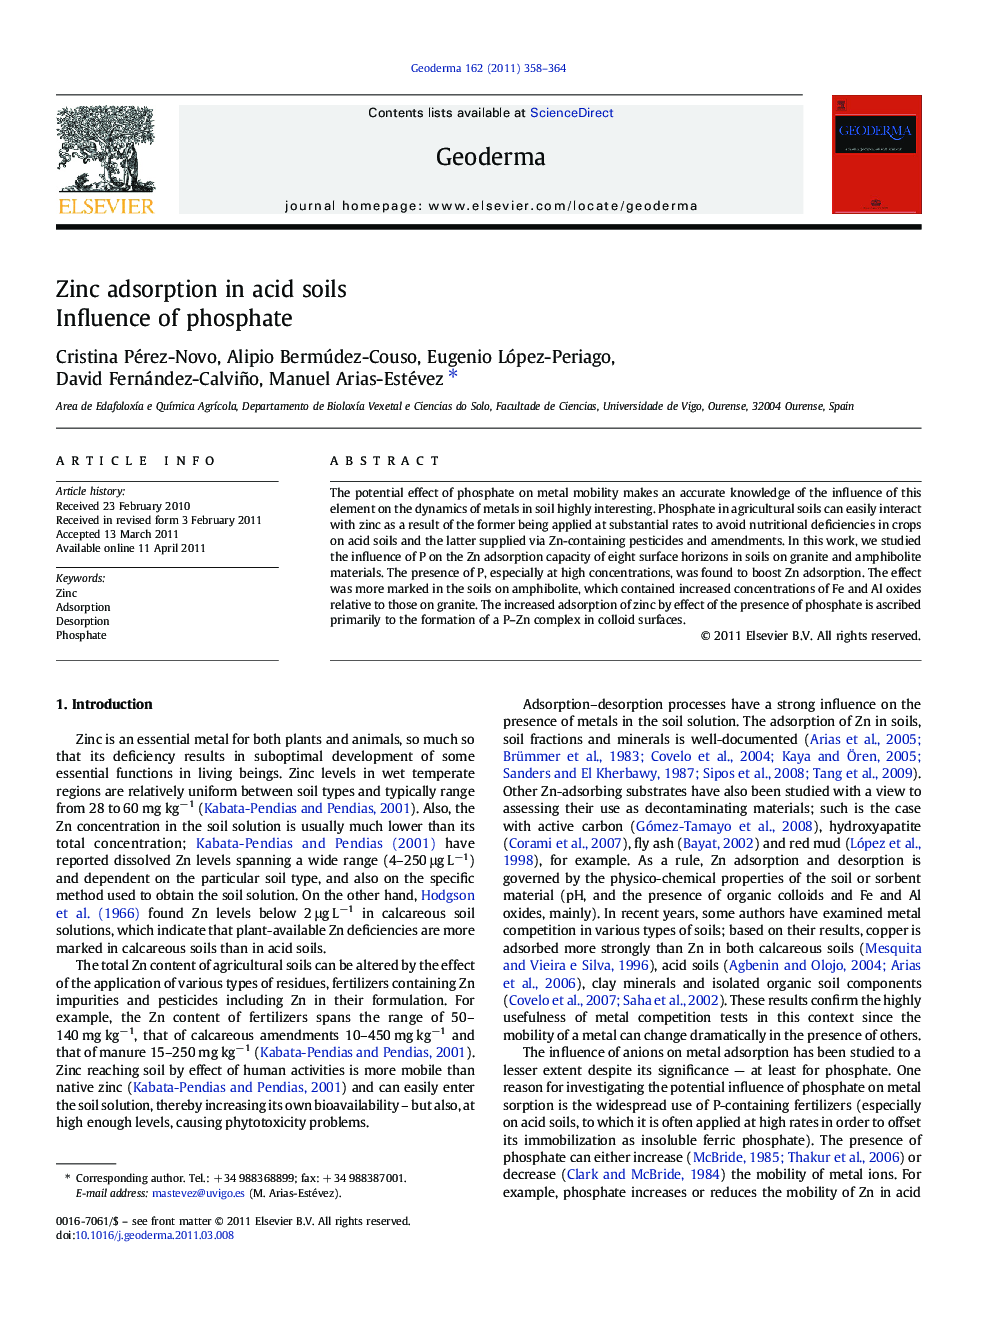 Zinc adsorption in acid soils: Influence of phosphate